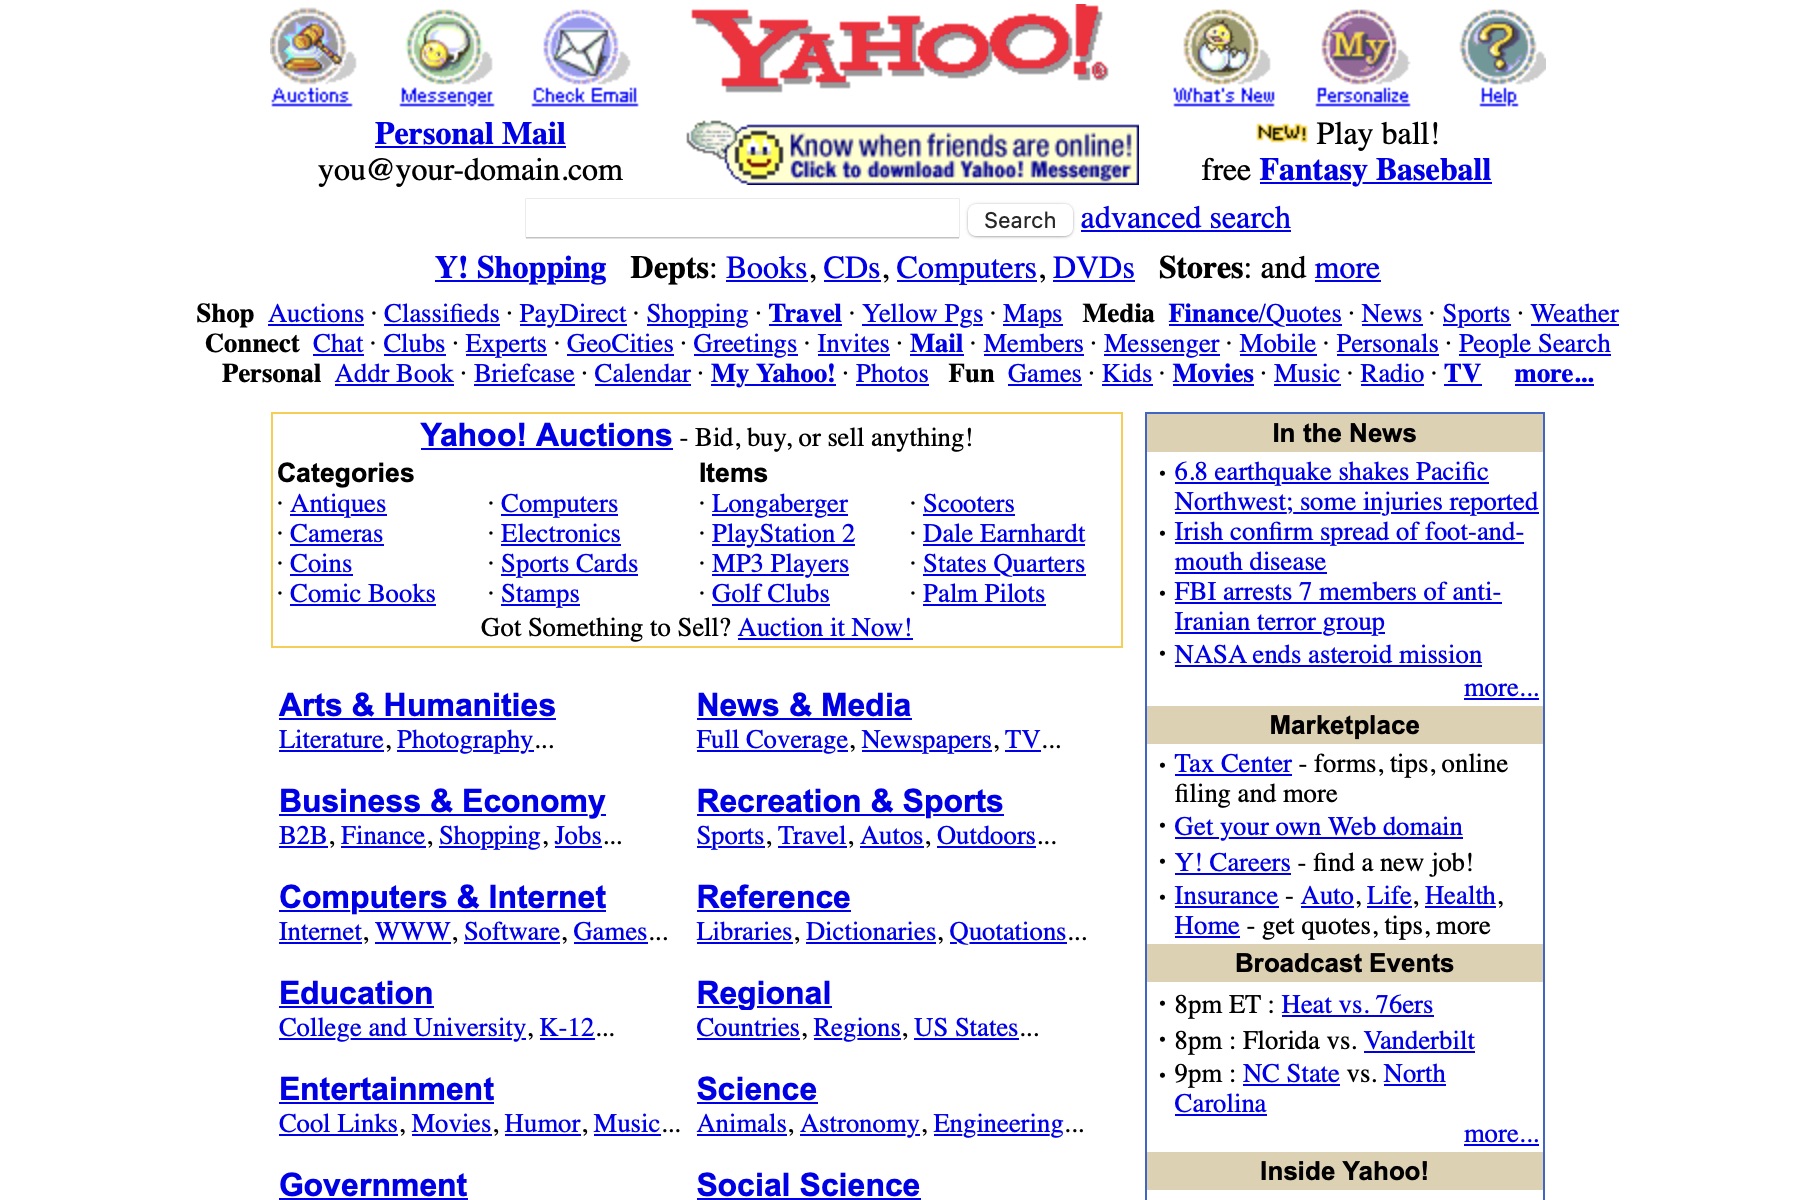 A screenshot of Yahoo's homepage in 2001